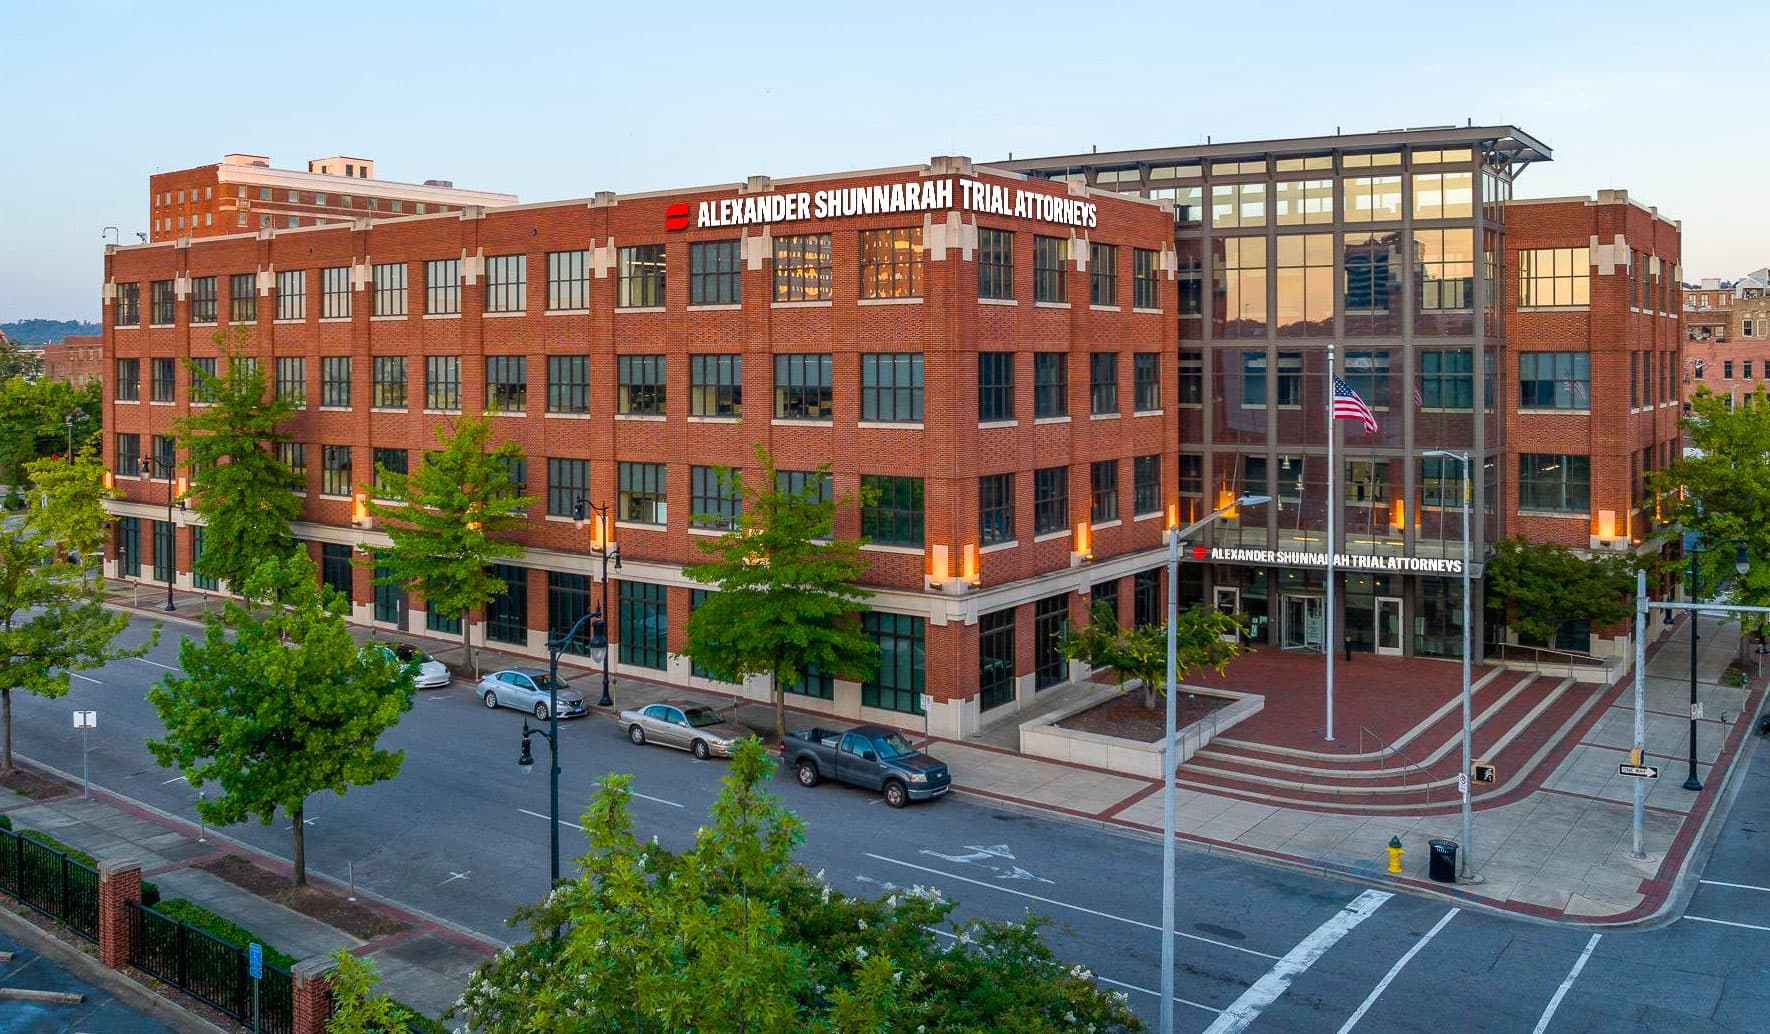 Large image of the Alexander Shunnarah Trial Attorneys Headquarters in Birmingham, Alabama